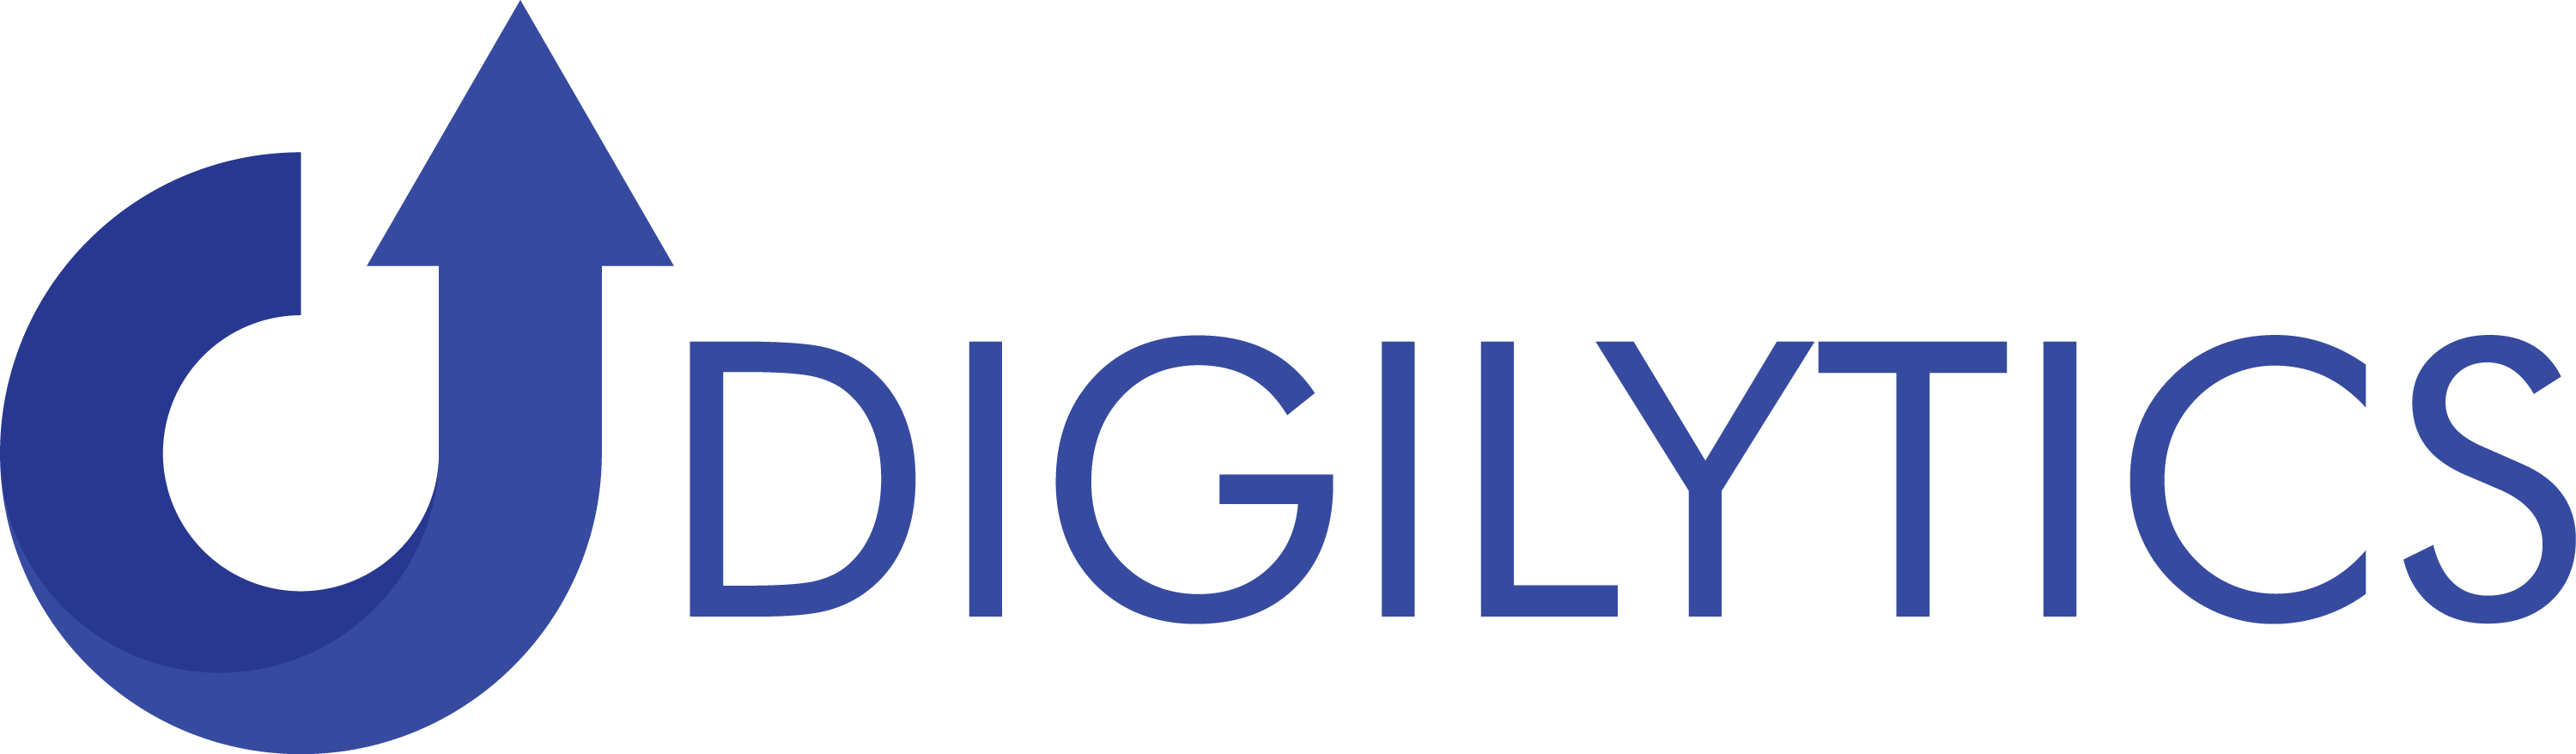 Digilytics Logo